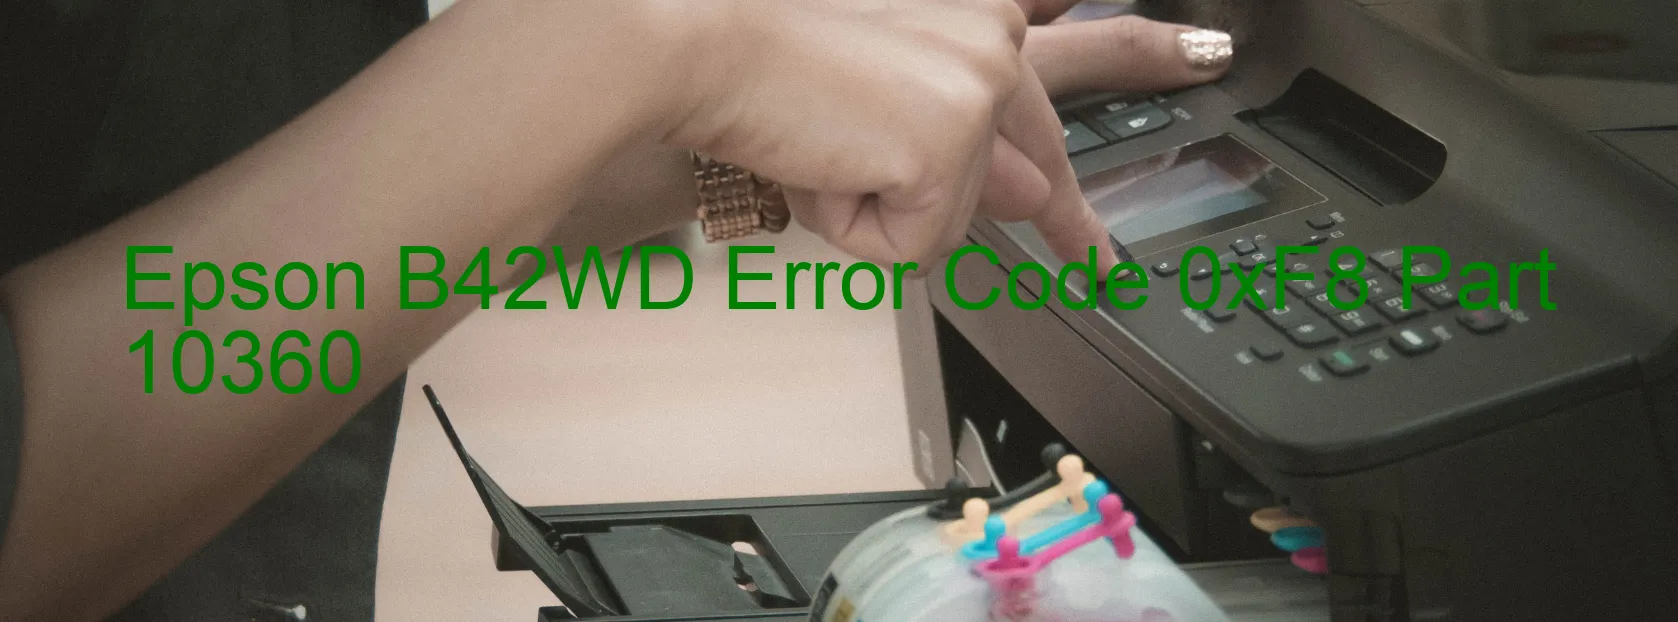 Epson B42WD Error Code 0xF8 Part 10360